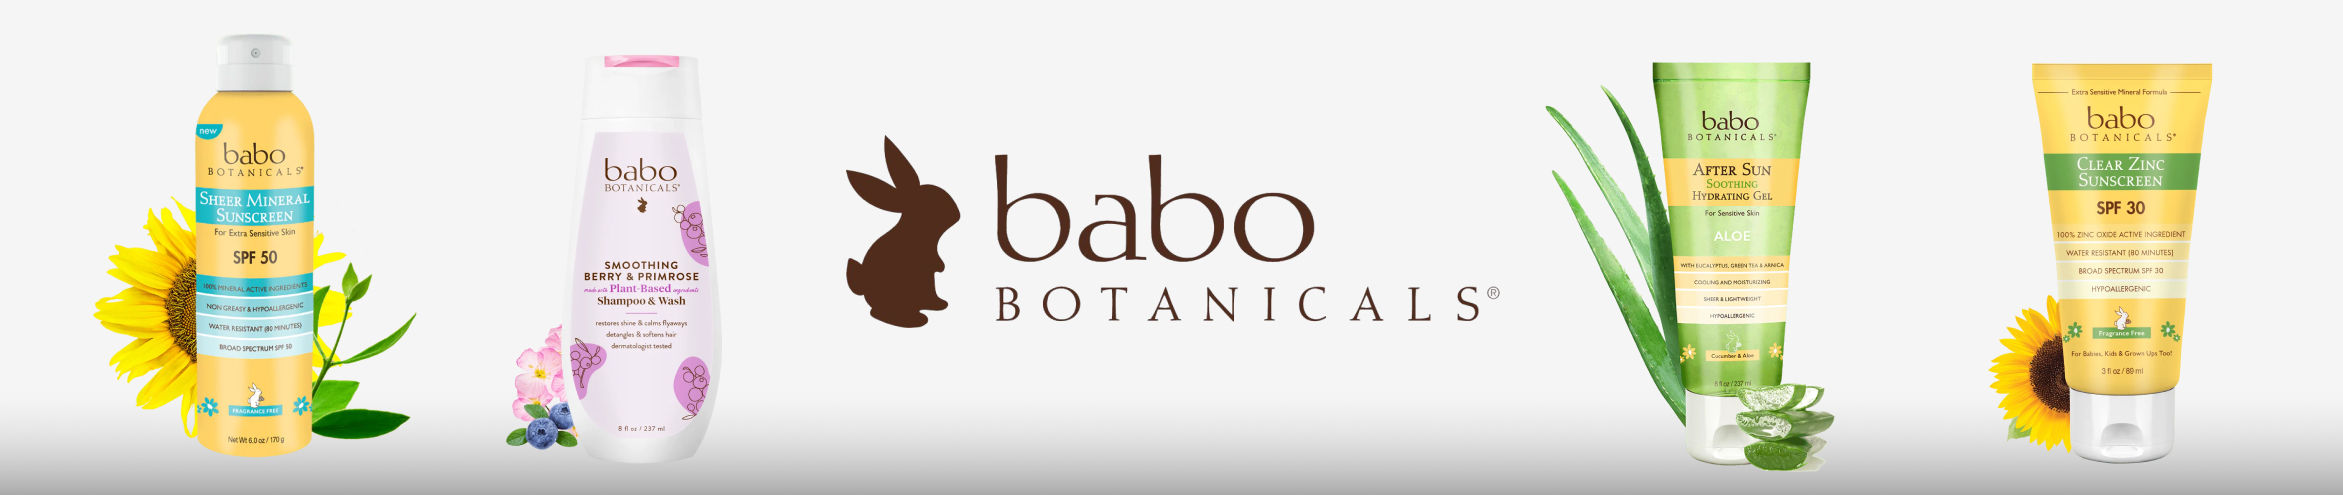 Babo Botanicals - Hair Shampoo